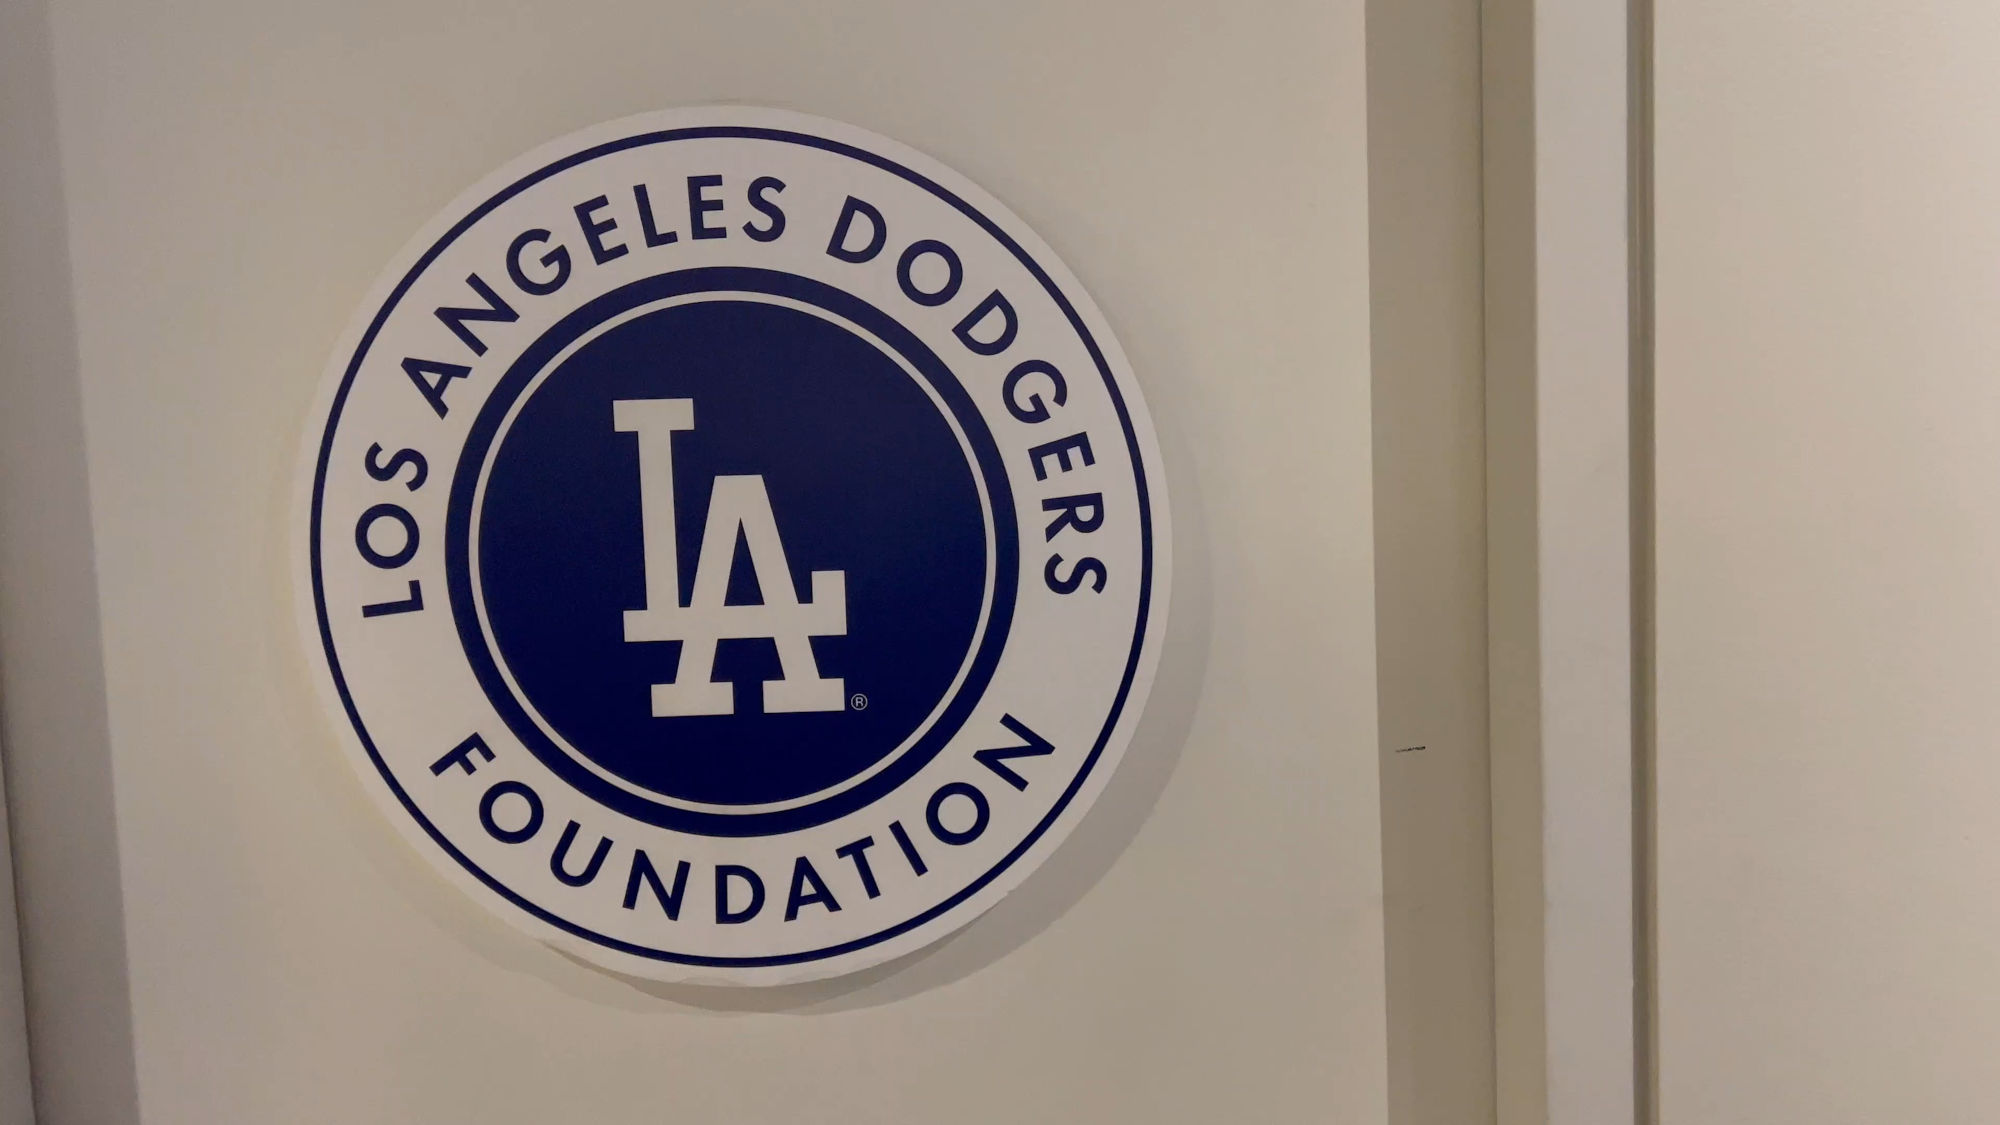 Foundation Los Angeles Dodgers